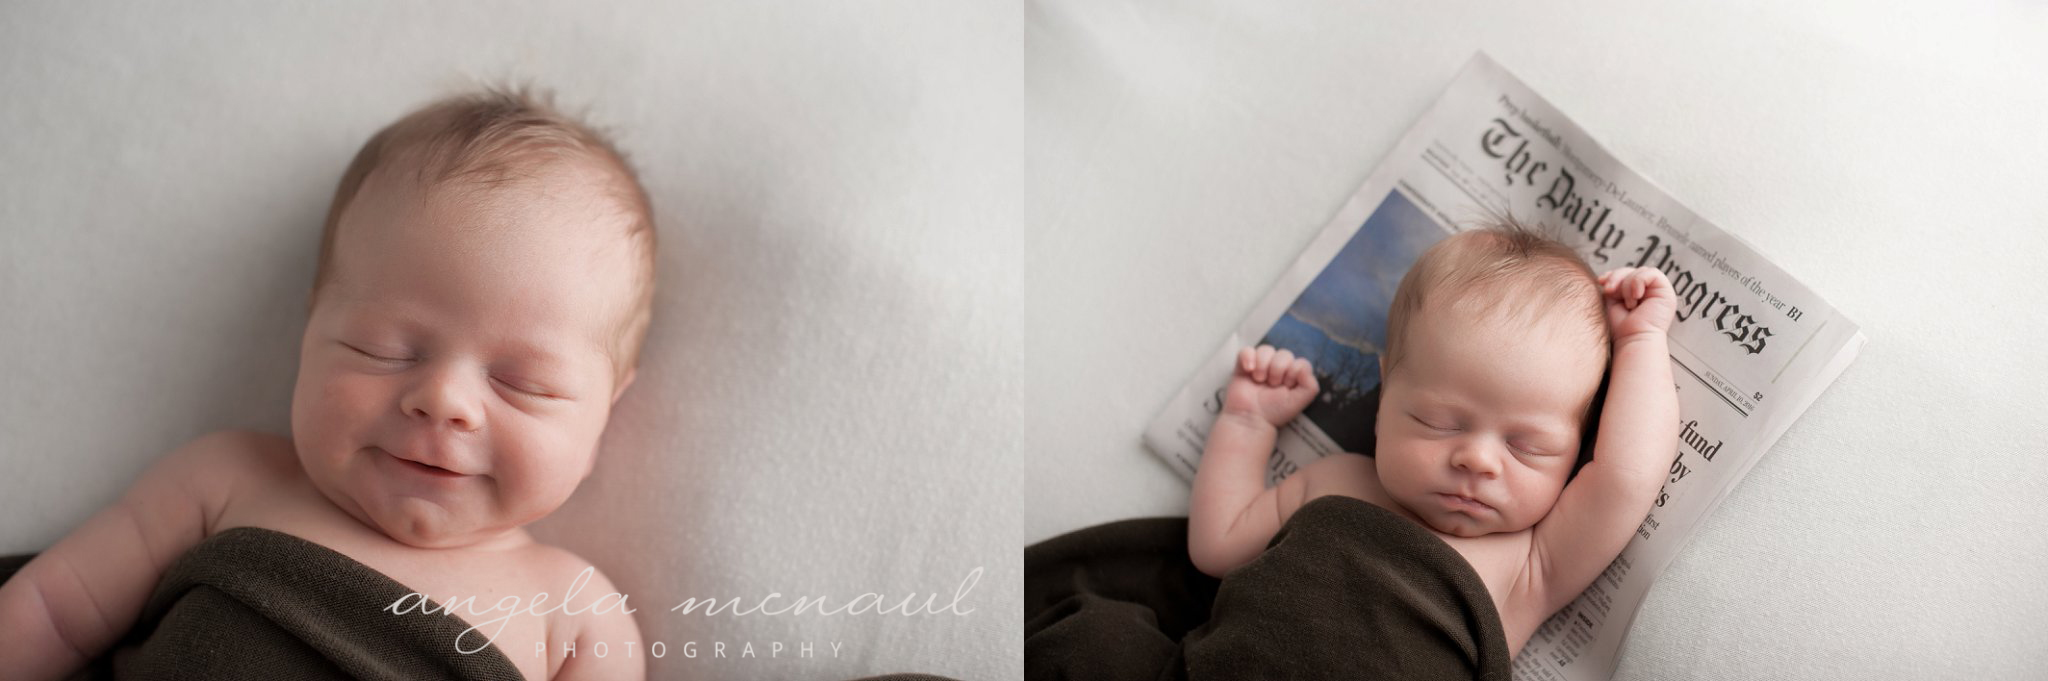 Gordonsville Baby and Newborn Photographer_0135.jpg